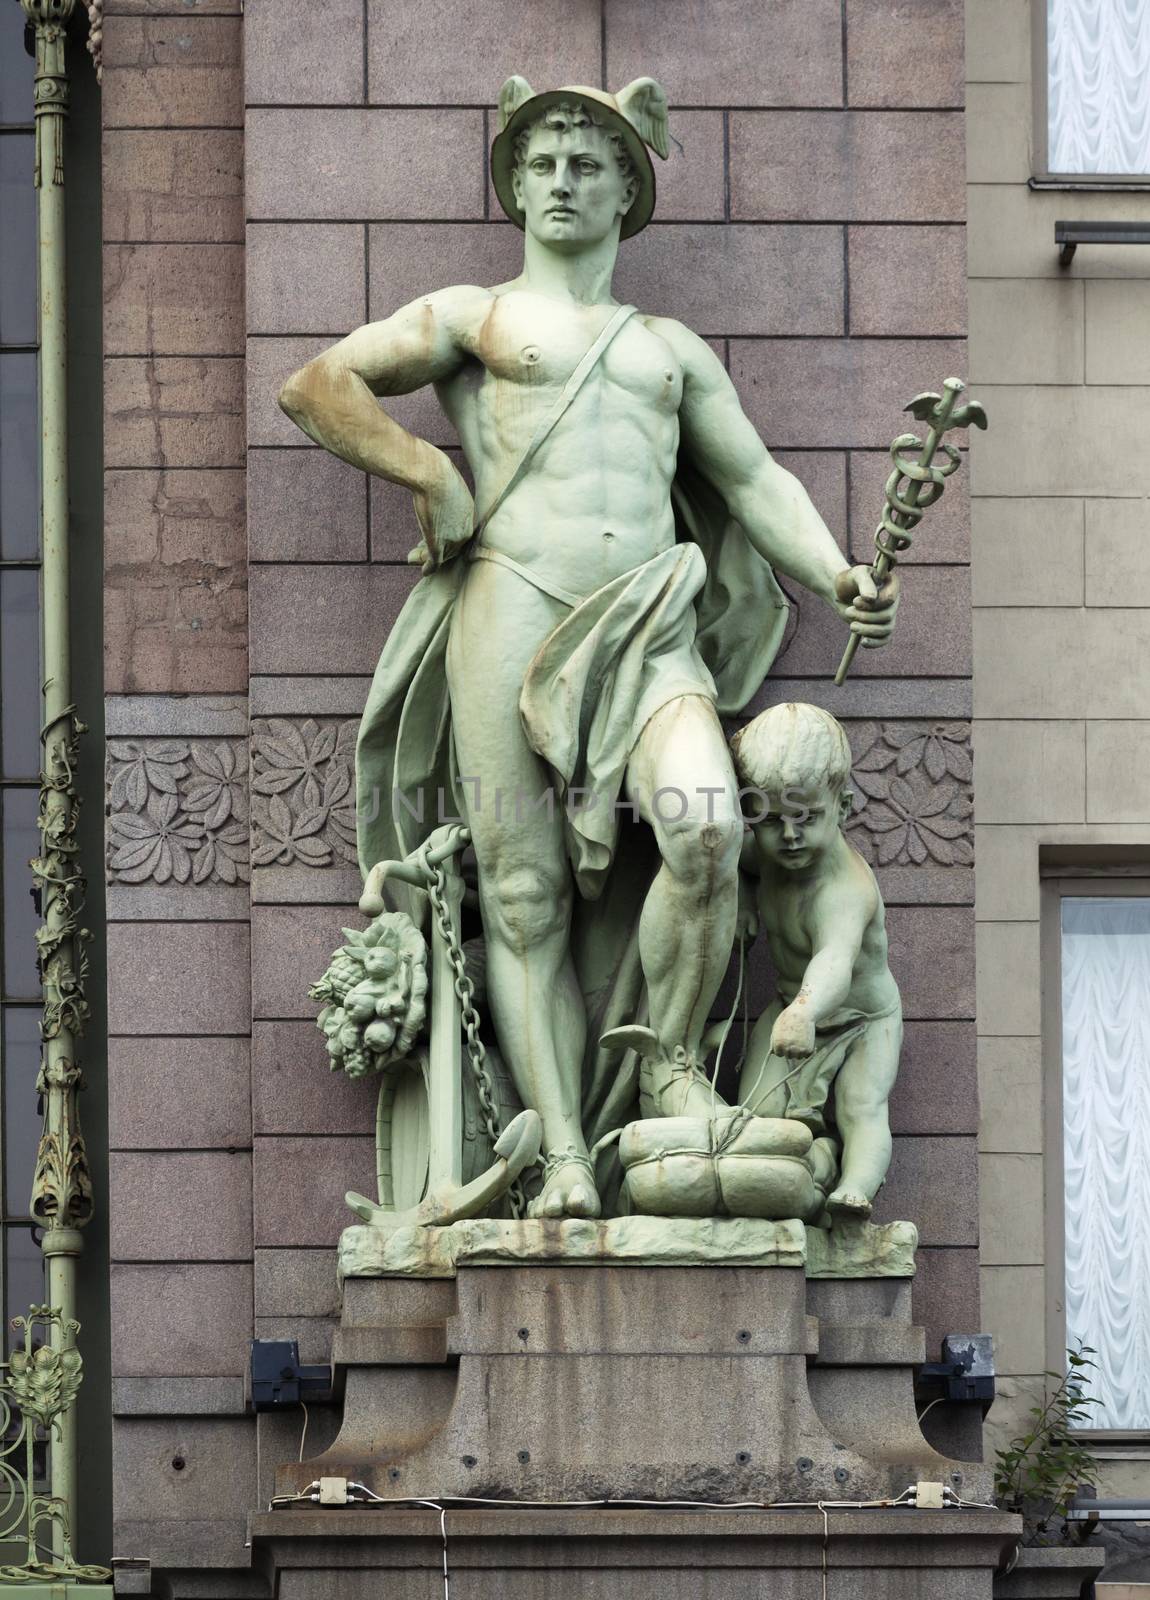 Statue of Mercury, god of commerce, in the front of Eliseyev Emporium, Saint Petersburg, Russia